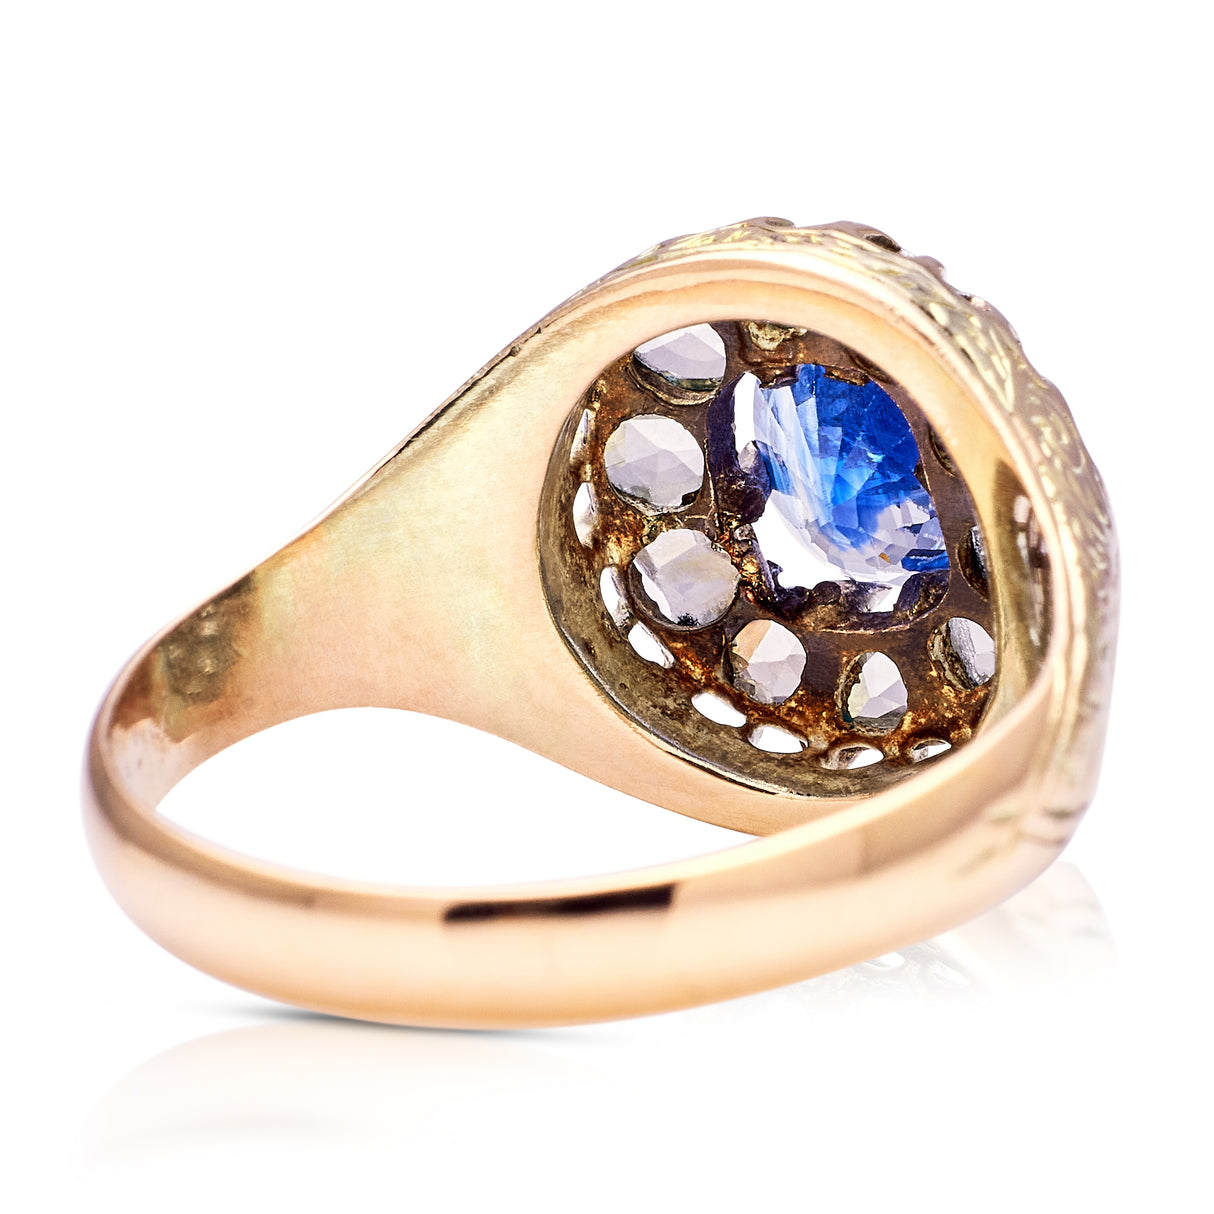 Antique, Victorian blue sapphire & rose-cut diamond daisy cluster ring